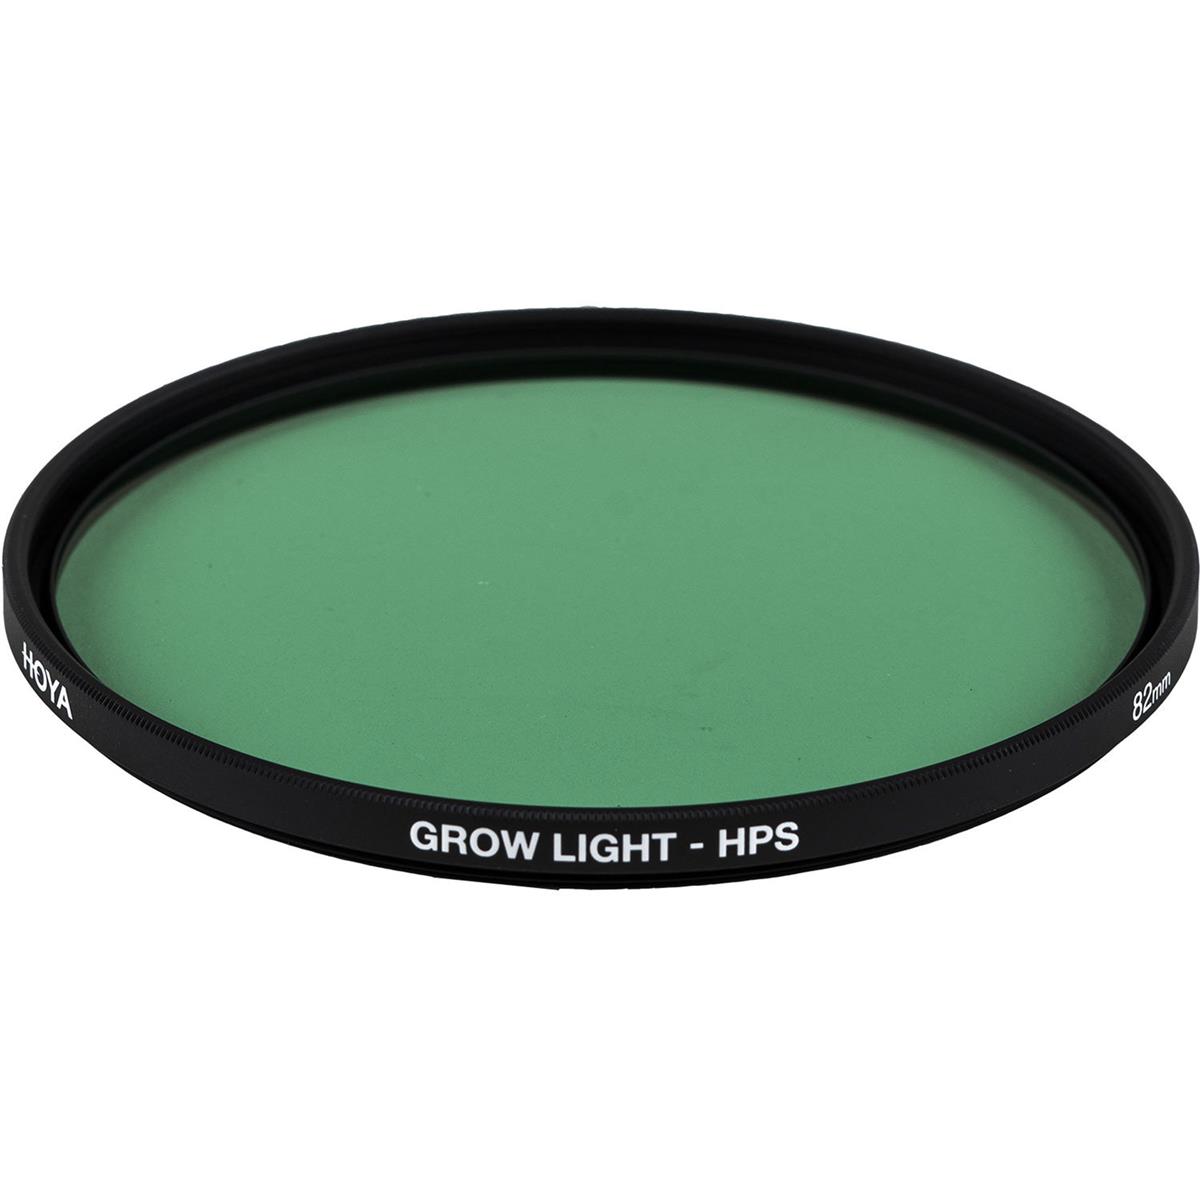 

Hoya 82mm Grow Light HPS Filter Kit, Includes 67, 72, 77mm Step-up Rings